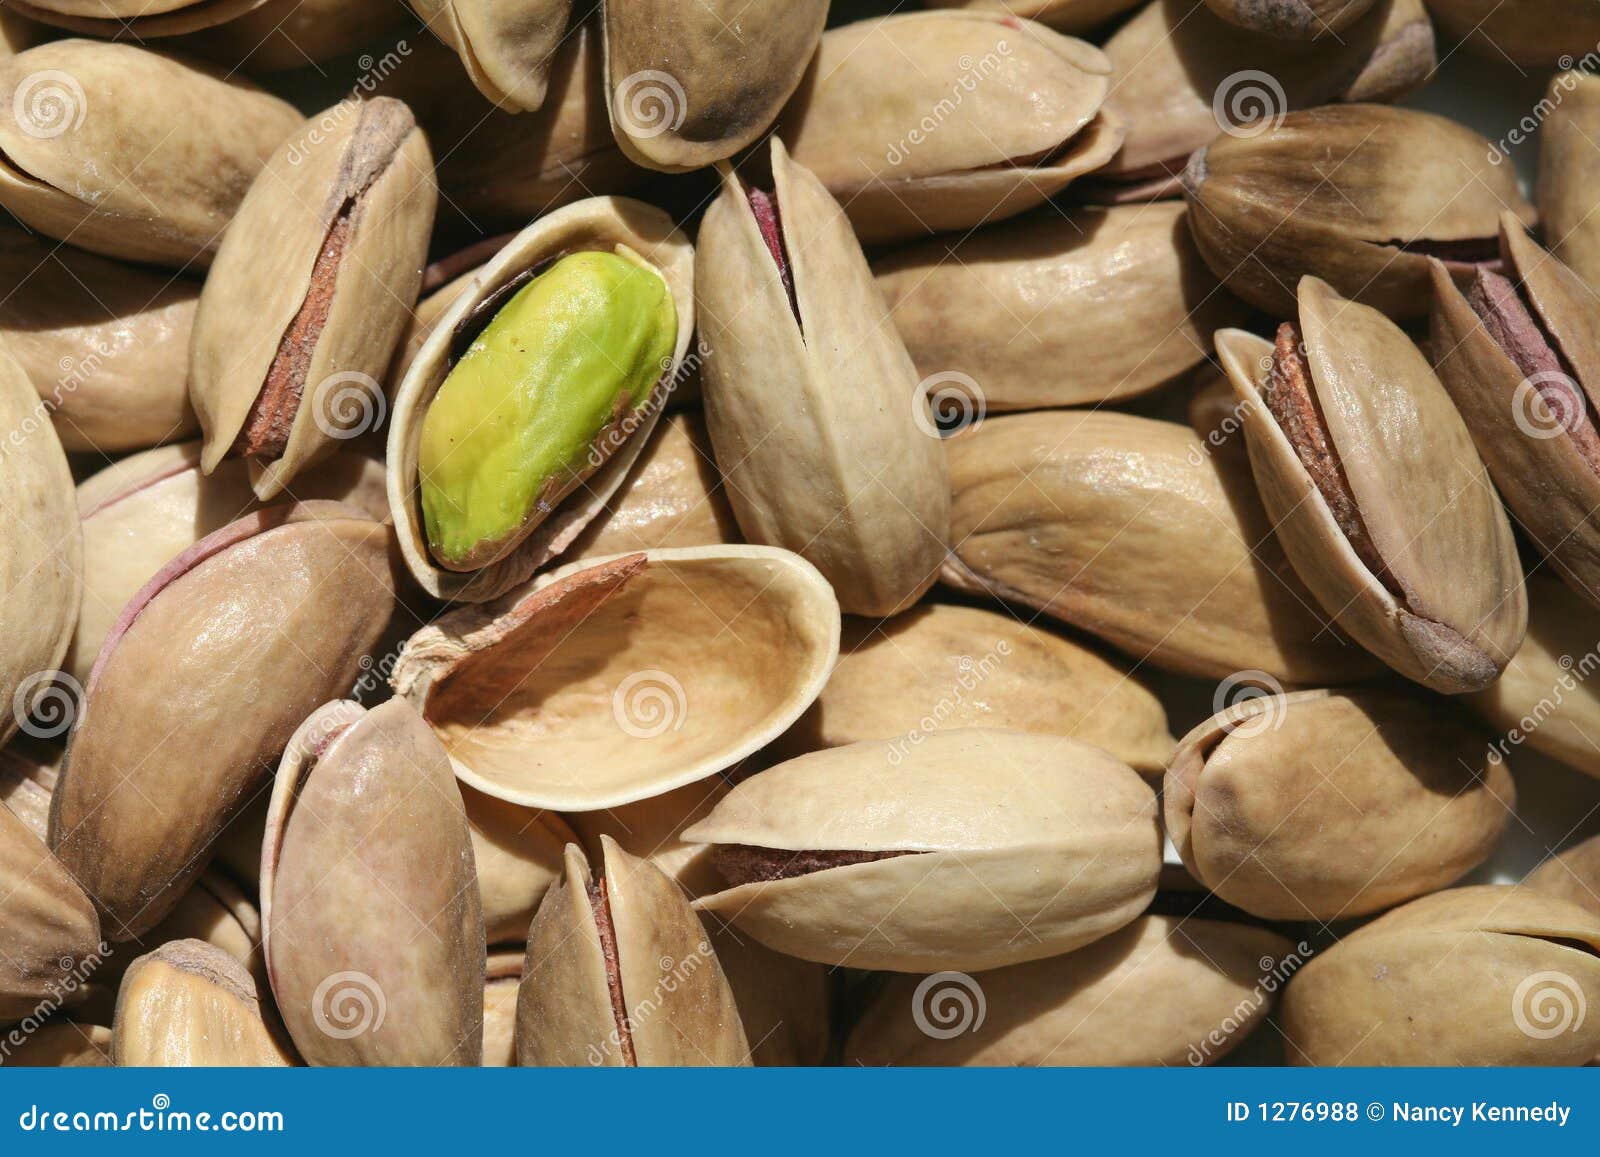 turkish pistachio nuts